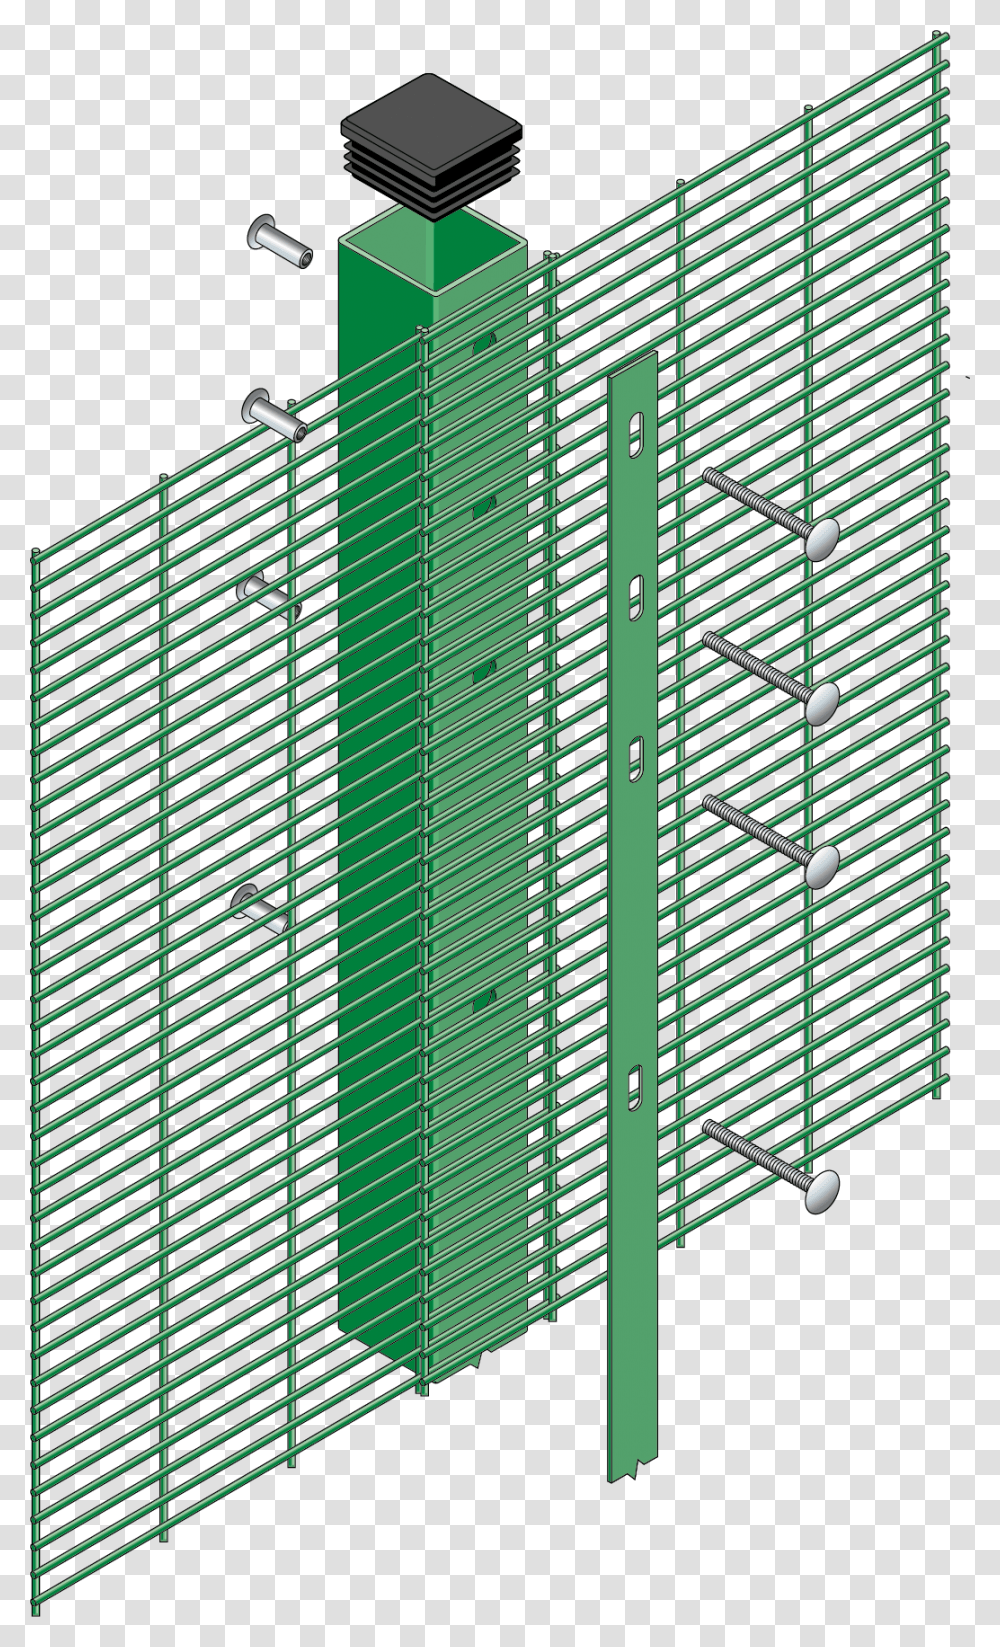 Prison Fence Securus Lite, Utility Pole, Potted Plant, Vase, Jar Transparent Png